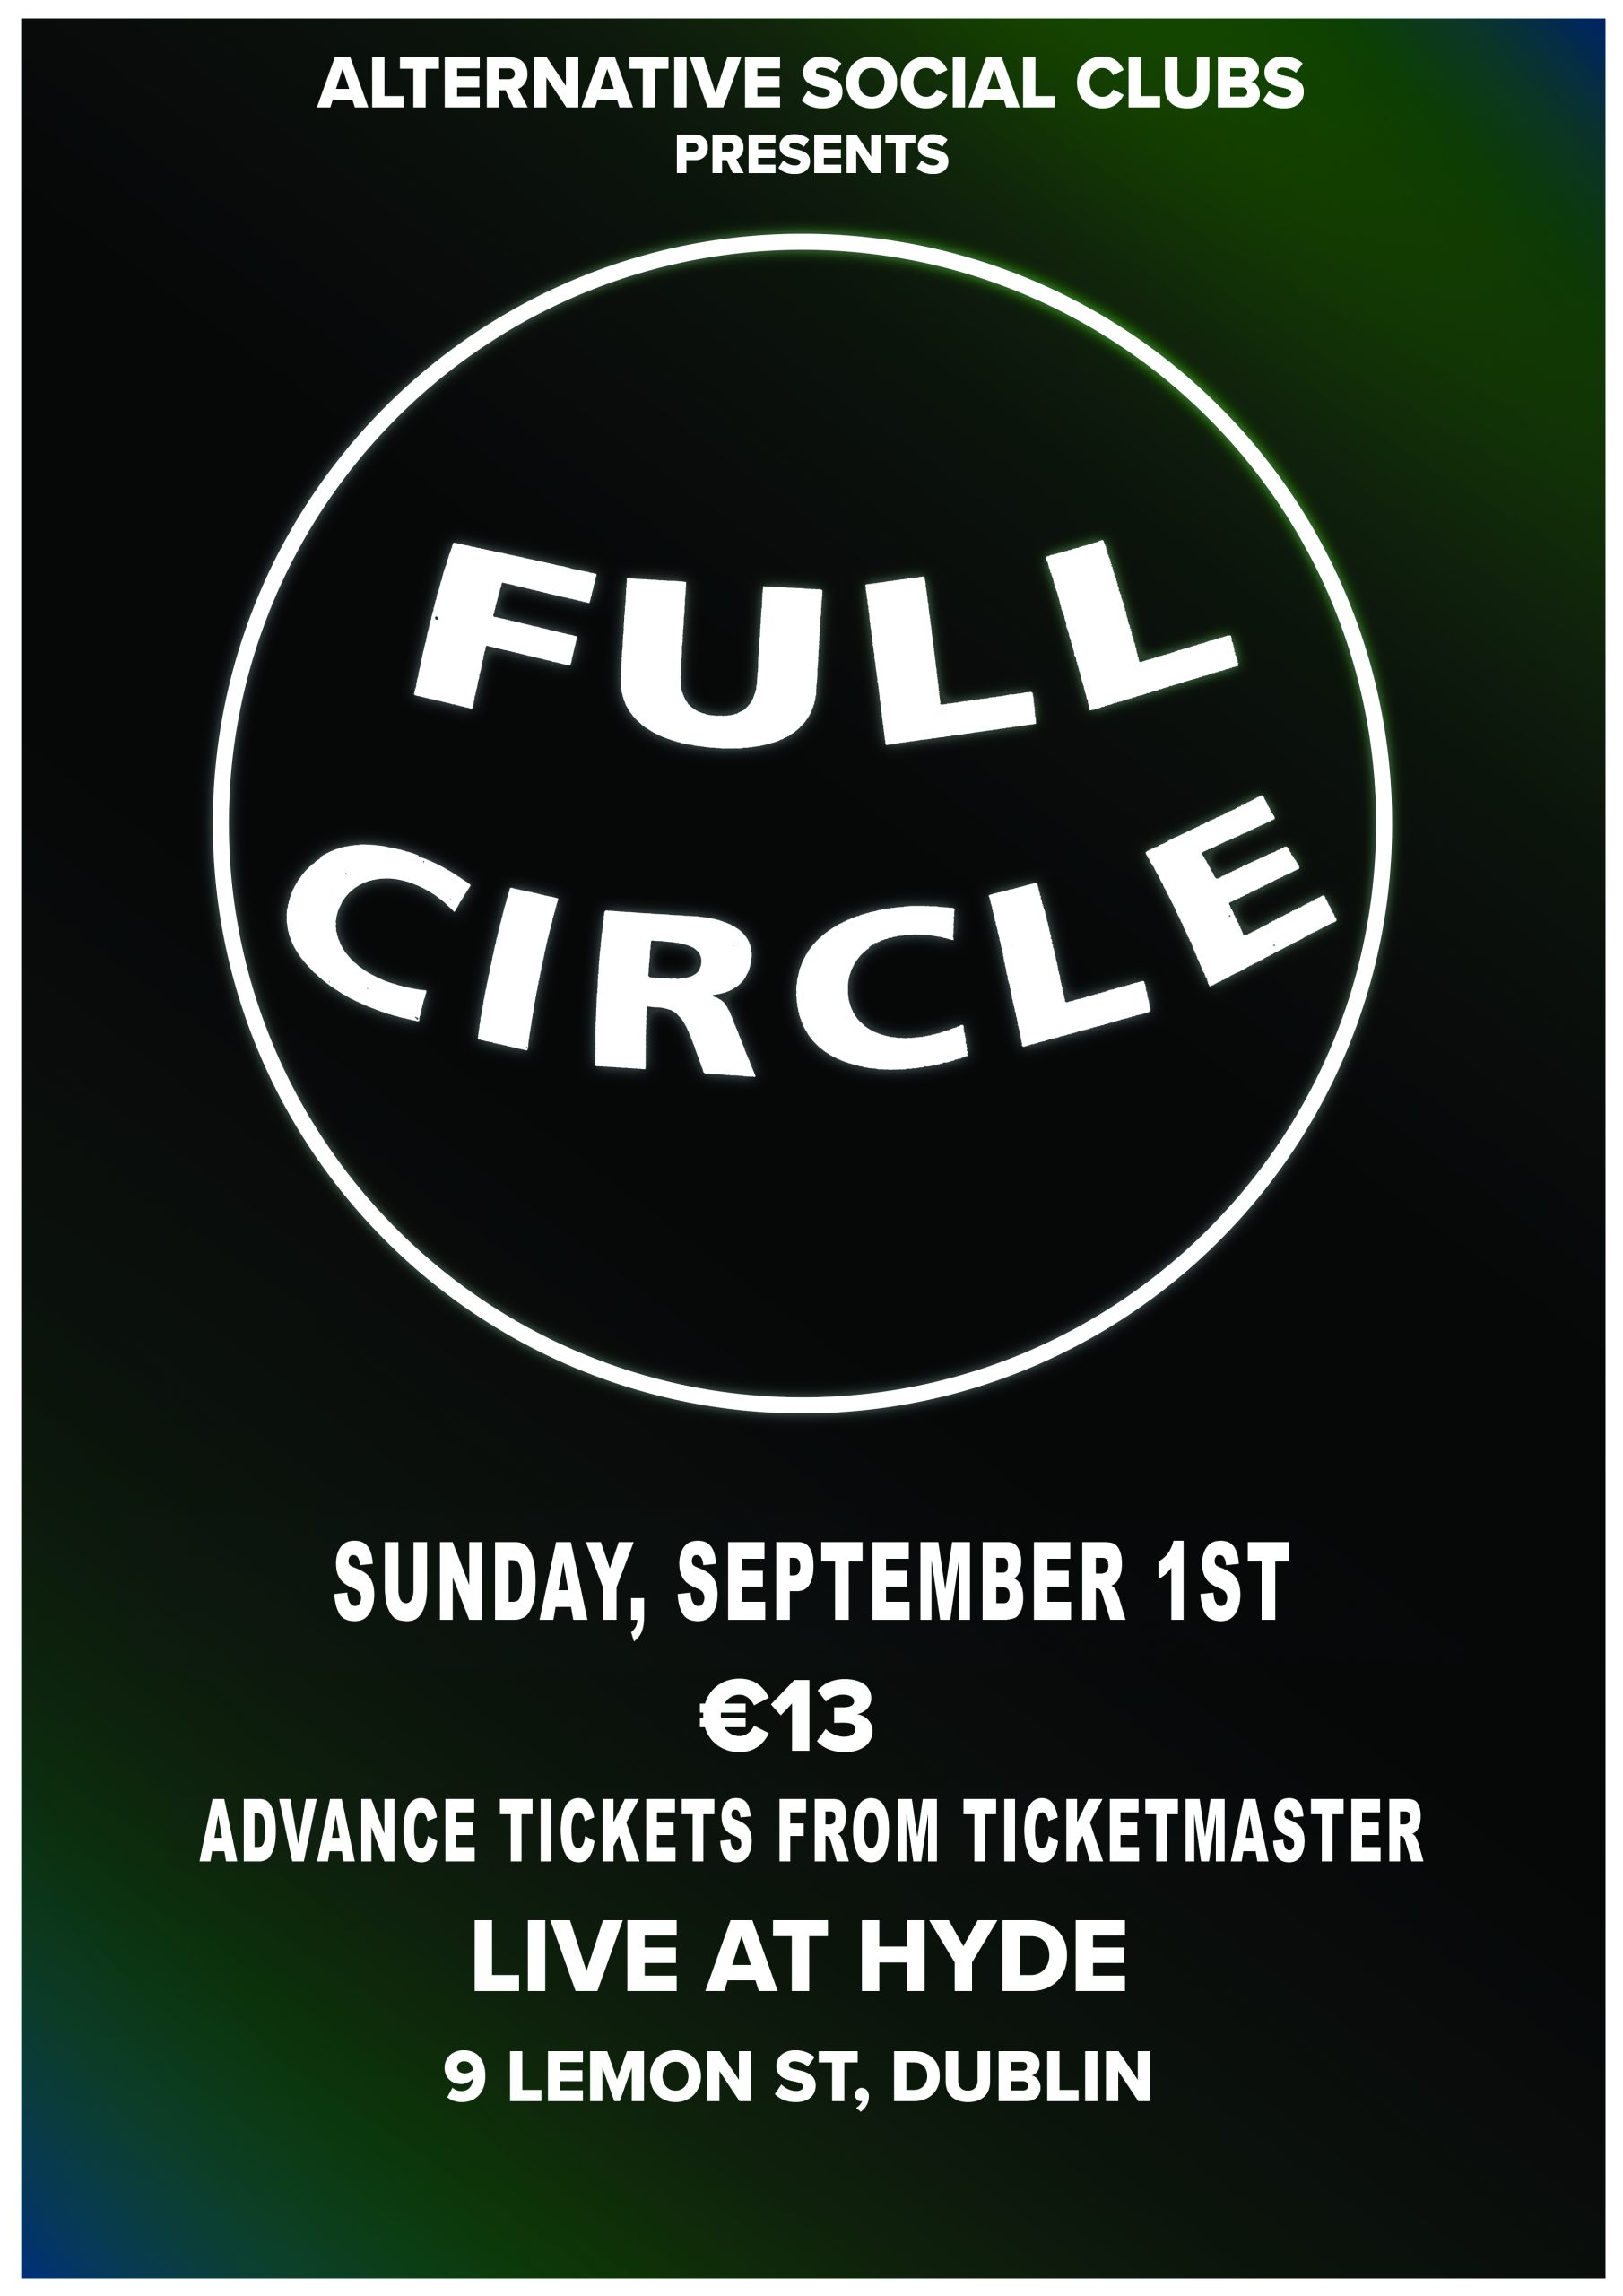 Full Circle play The Alternative Sunday Social Club in Hyde